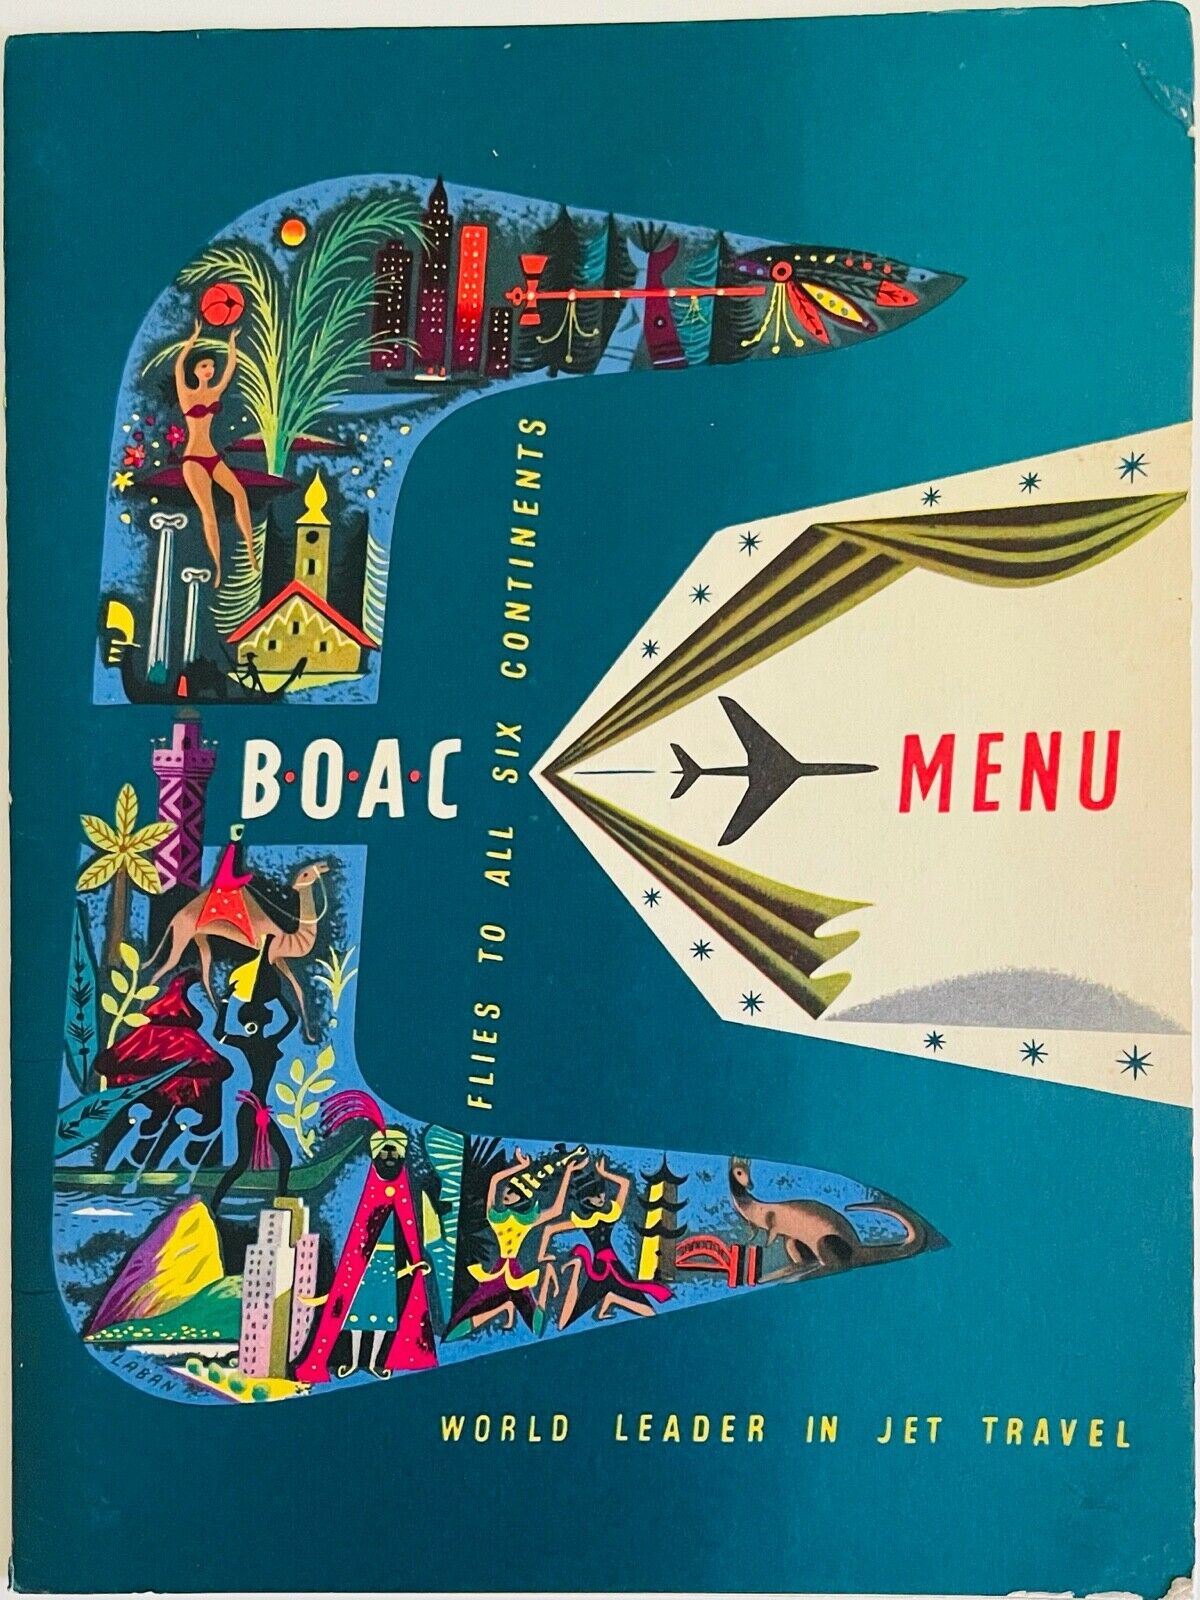 Boac Airlines Menu - First Class - 1960’s